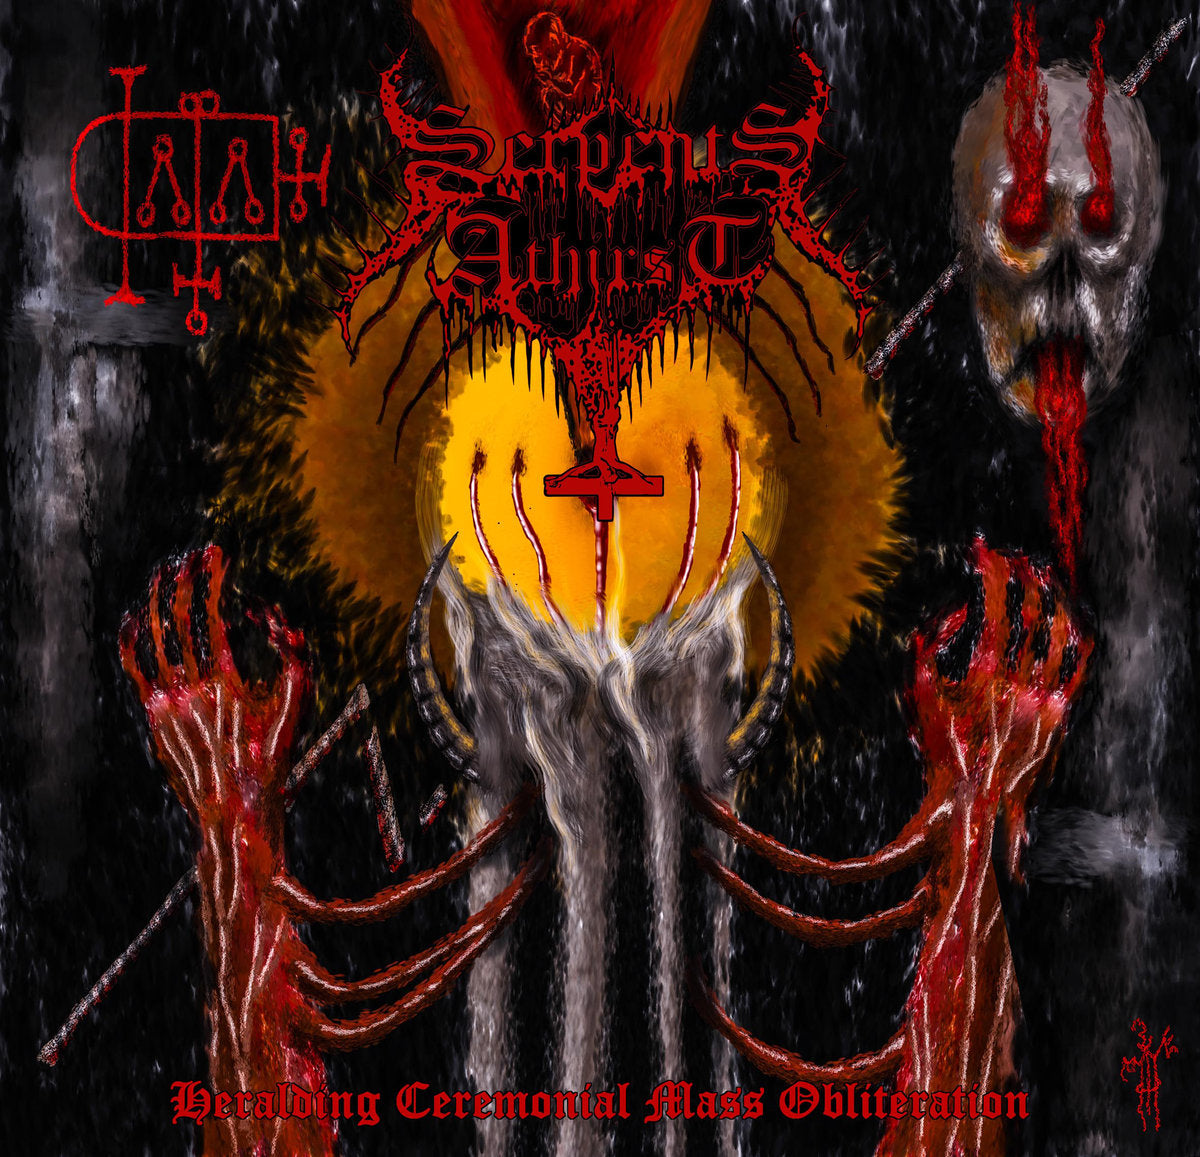 Serpents Athirst - Heralding Ceremonial Mass Obliteration LP (black vinyl)